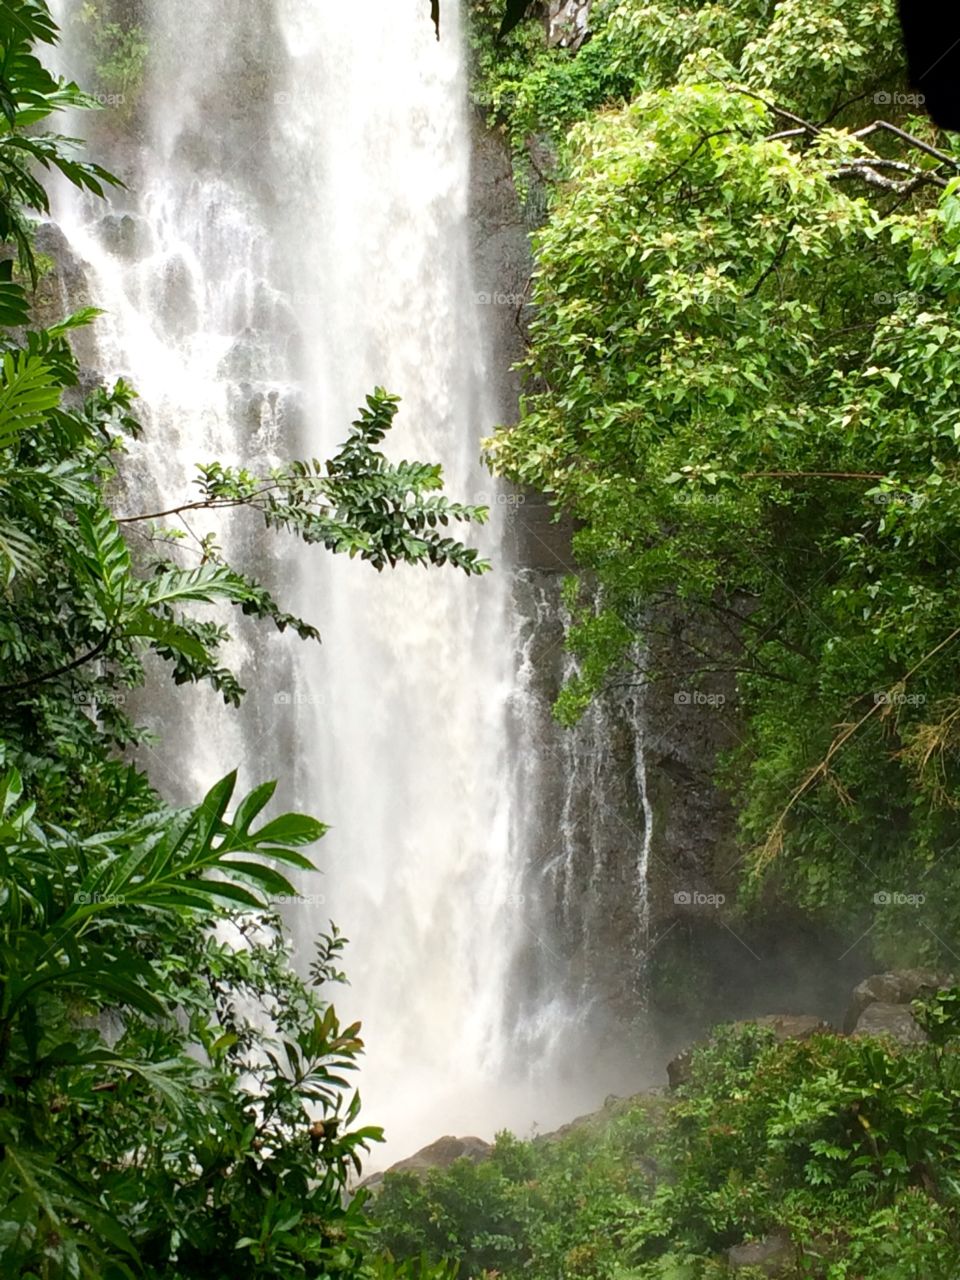 Impressive waterfall in Hawaii rainforest 